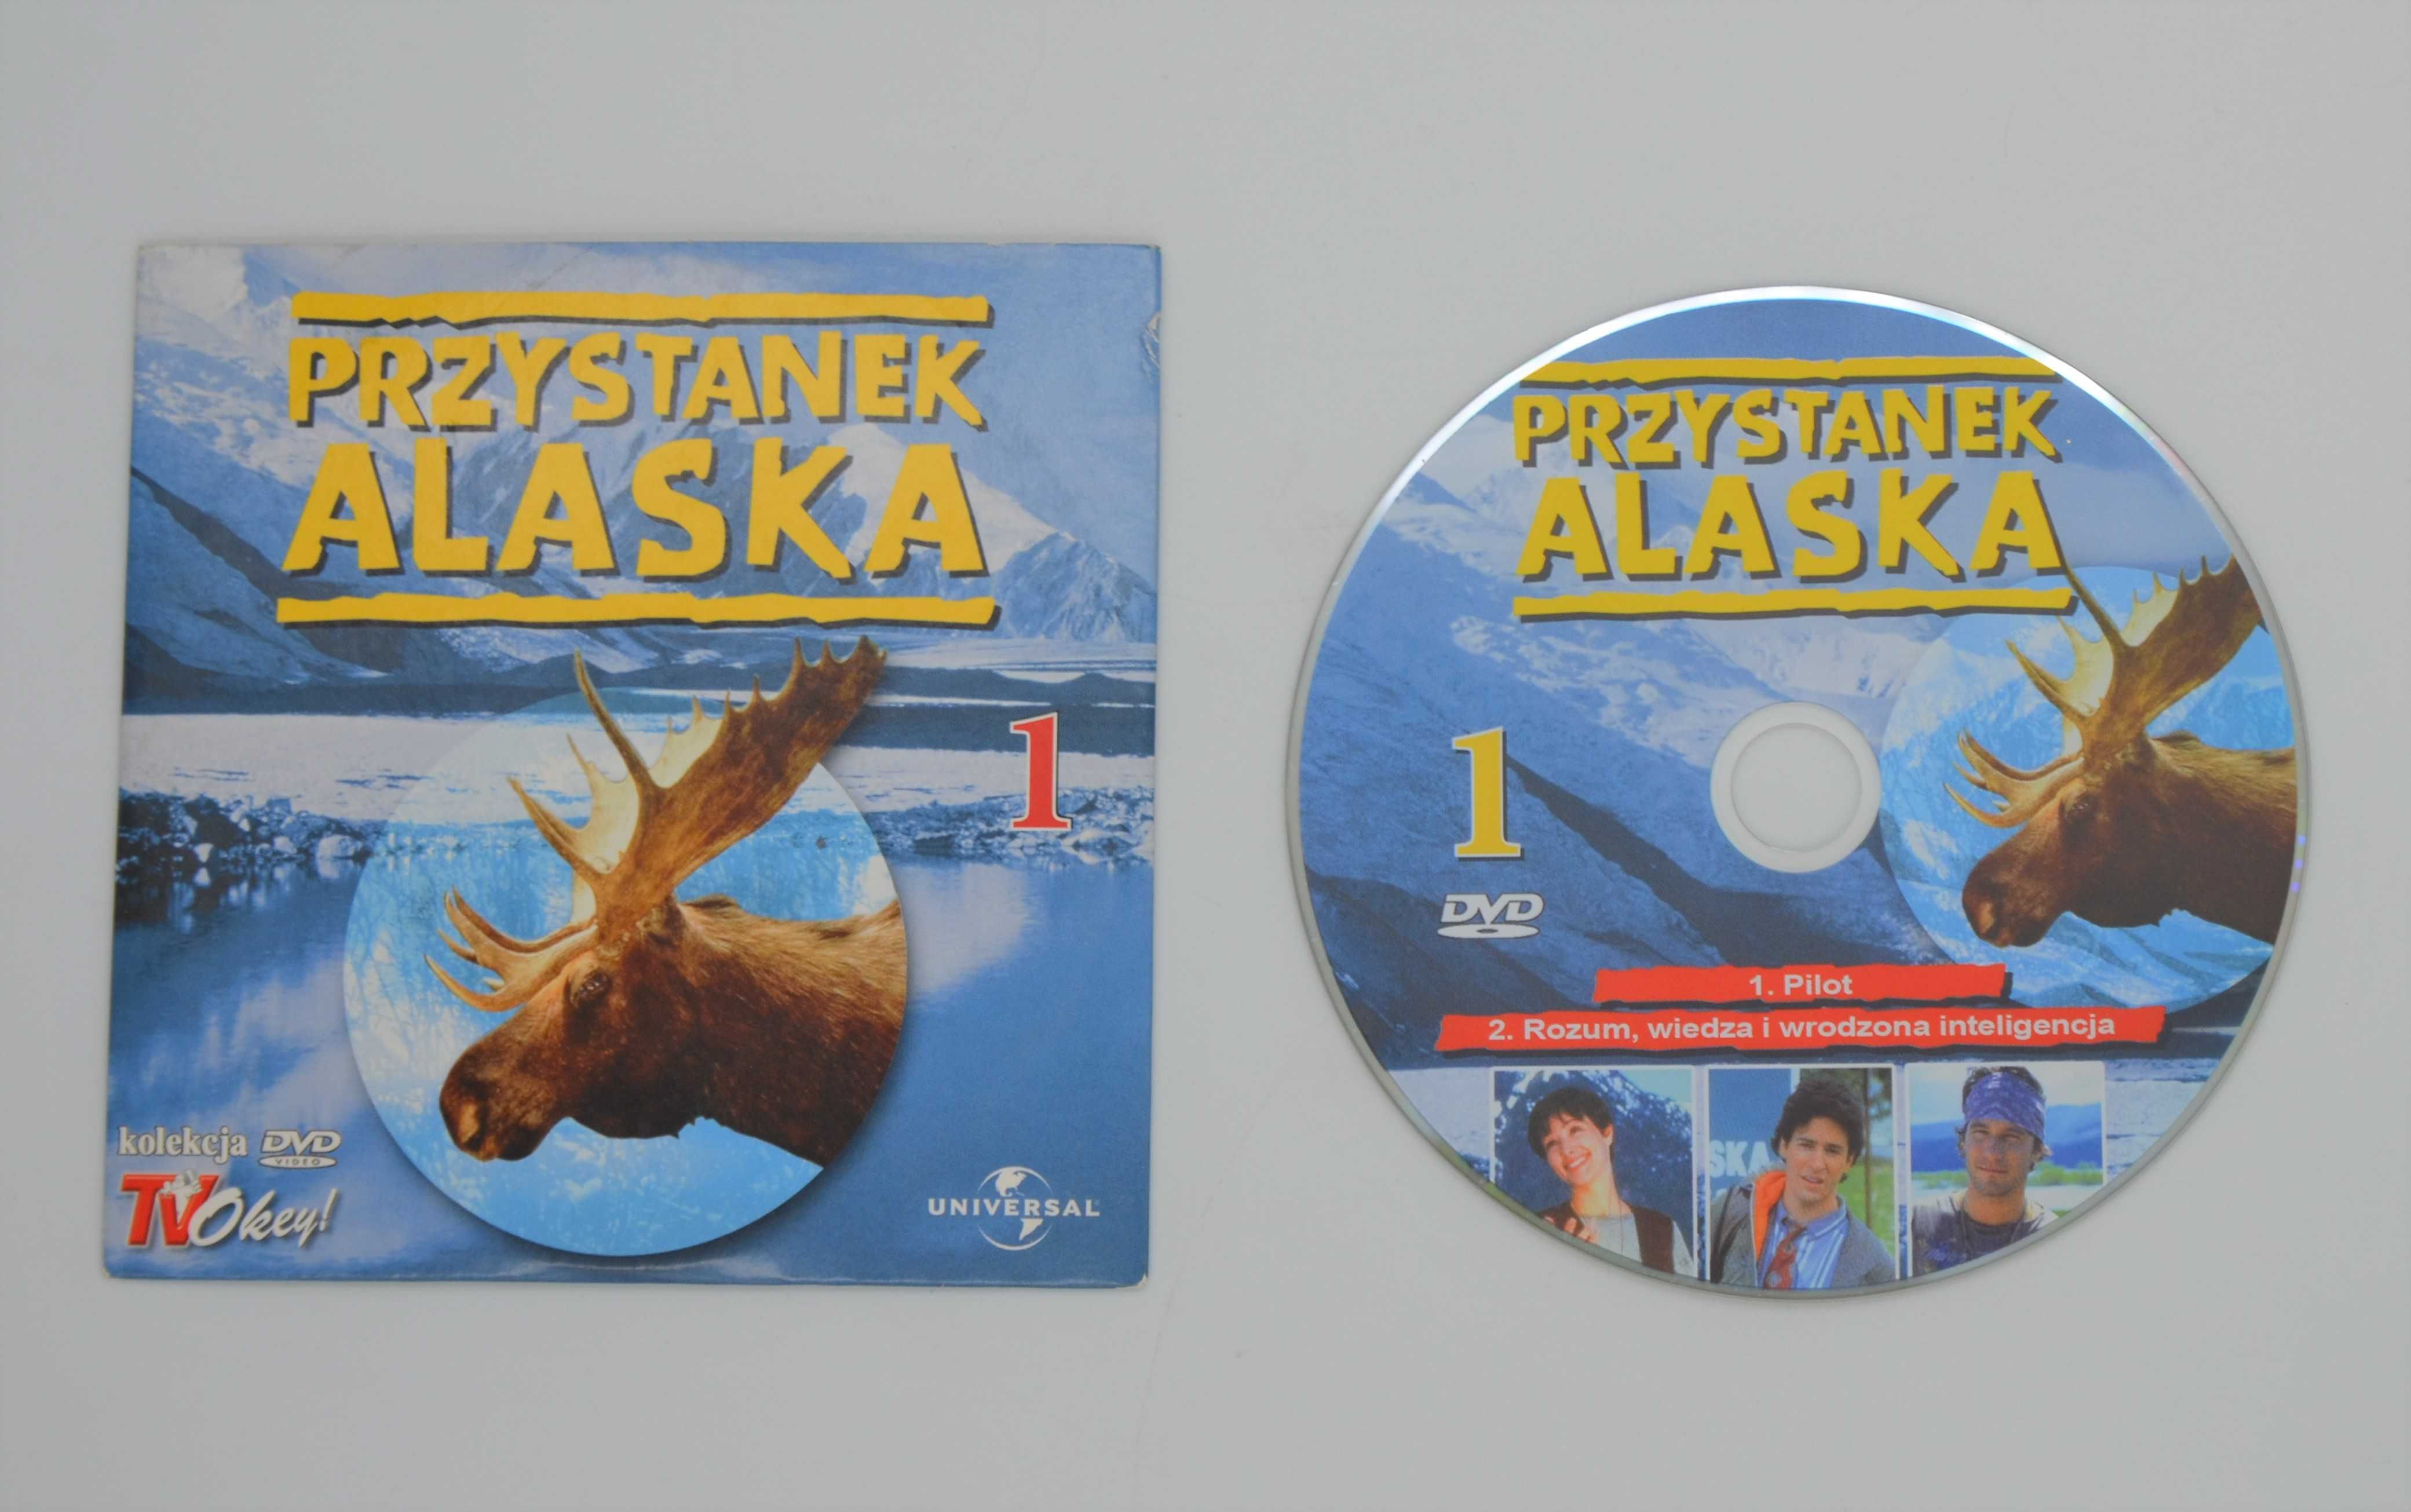 Przystanek Alaska odc. 1 i 2 - DVD